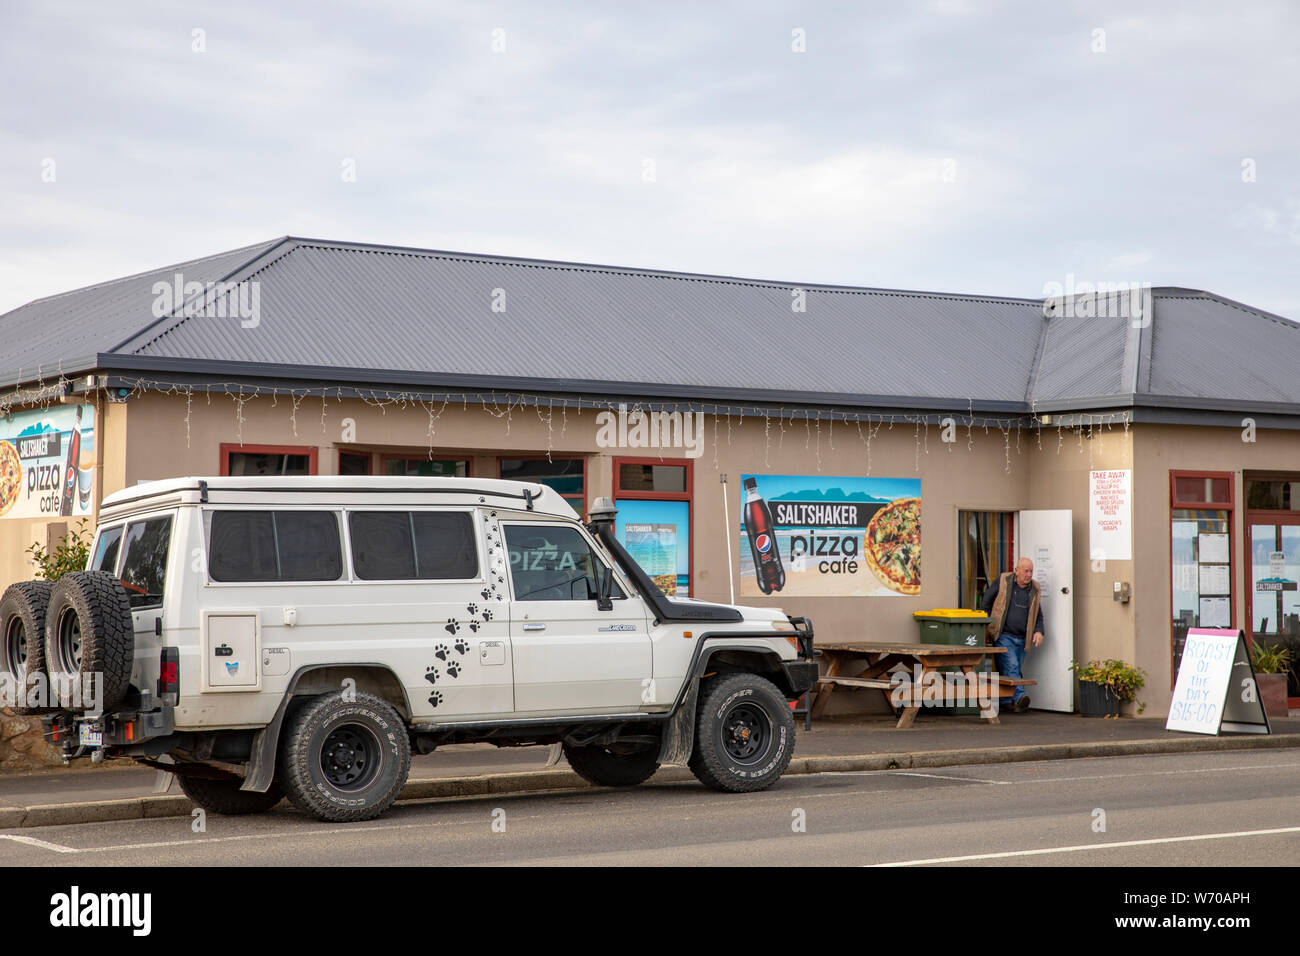 Toyota landcruiser troopy vehicle parked in Swansea town centre,East coast Tasmania,Australia Stock Photo